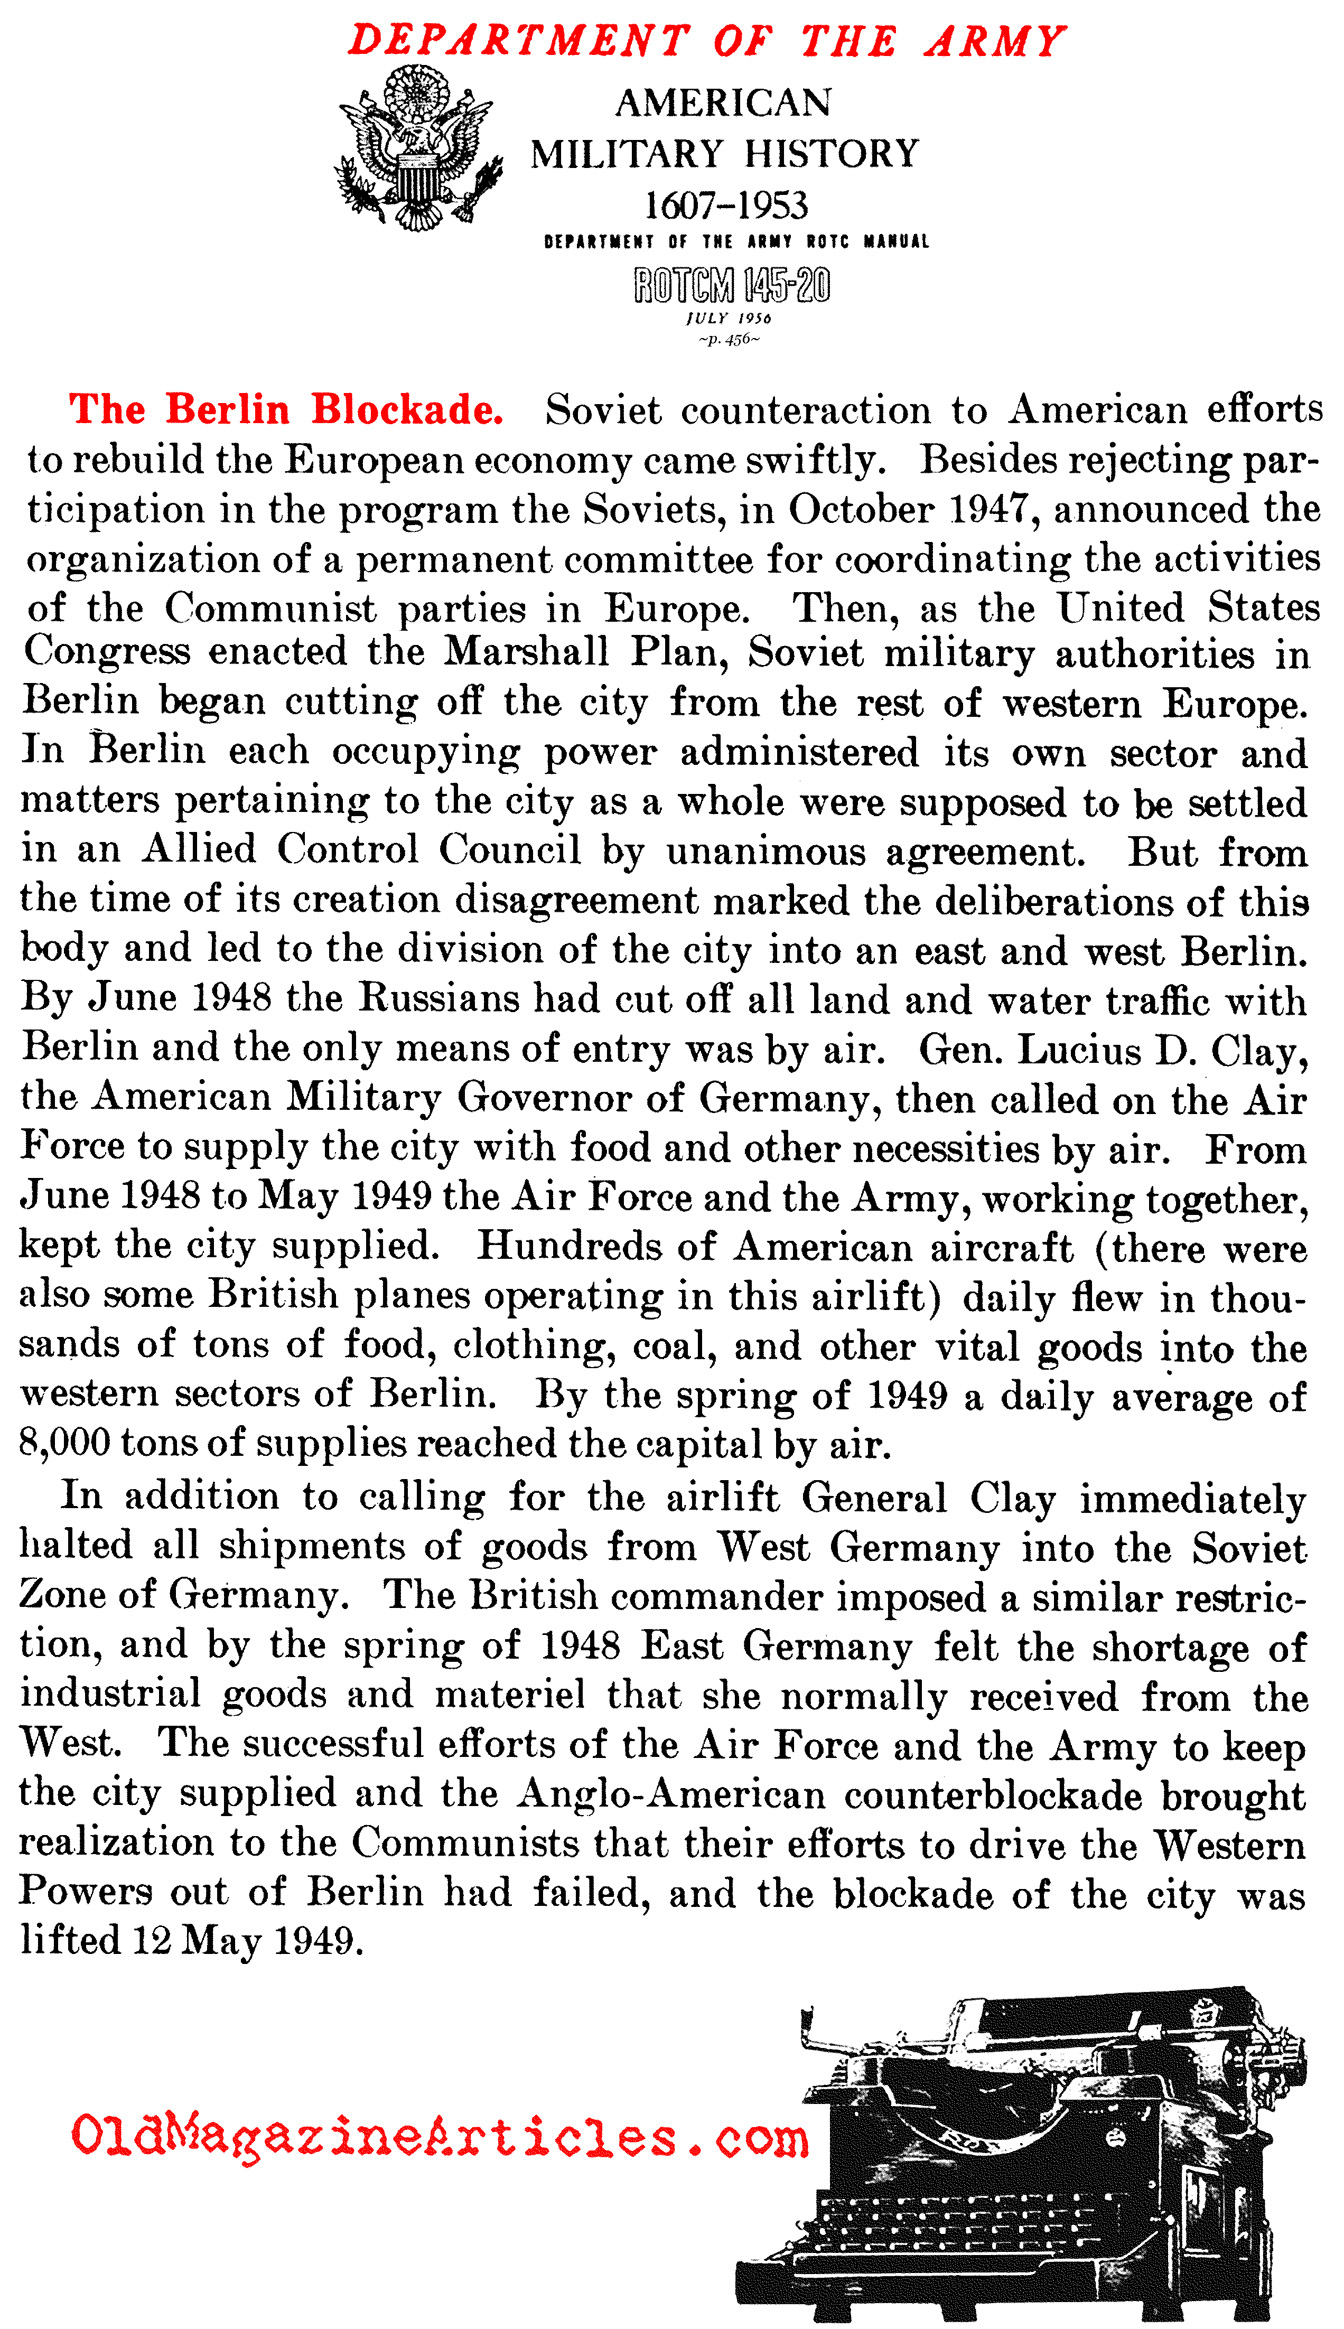 The Berlin Blockade: A Definition (R.O.T.C. Handbook, 1956)